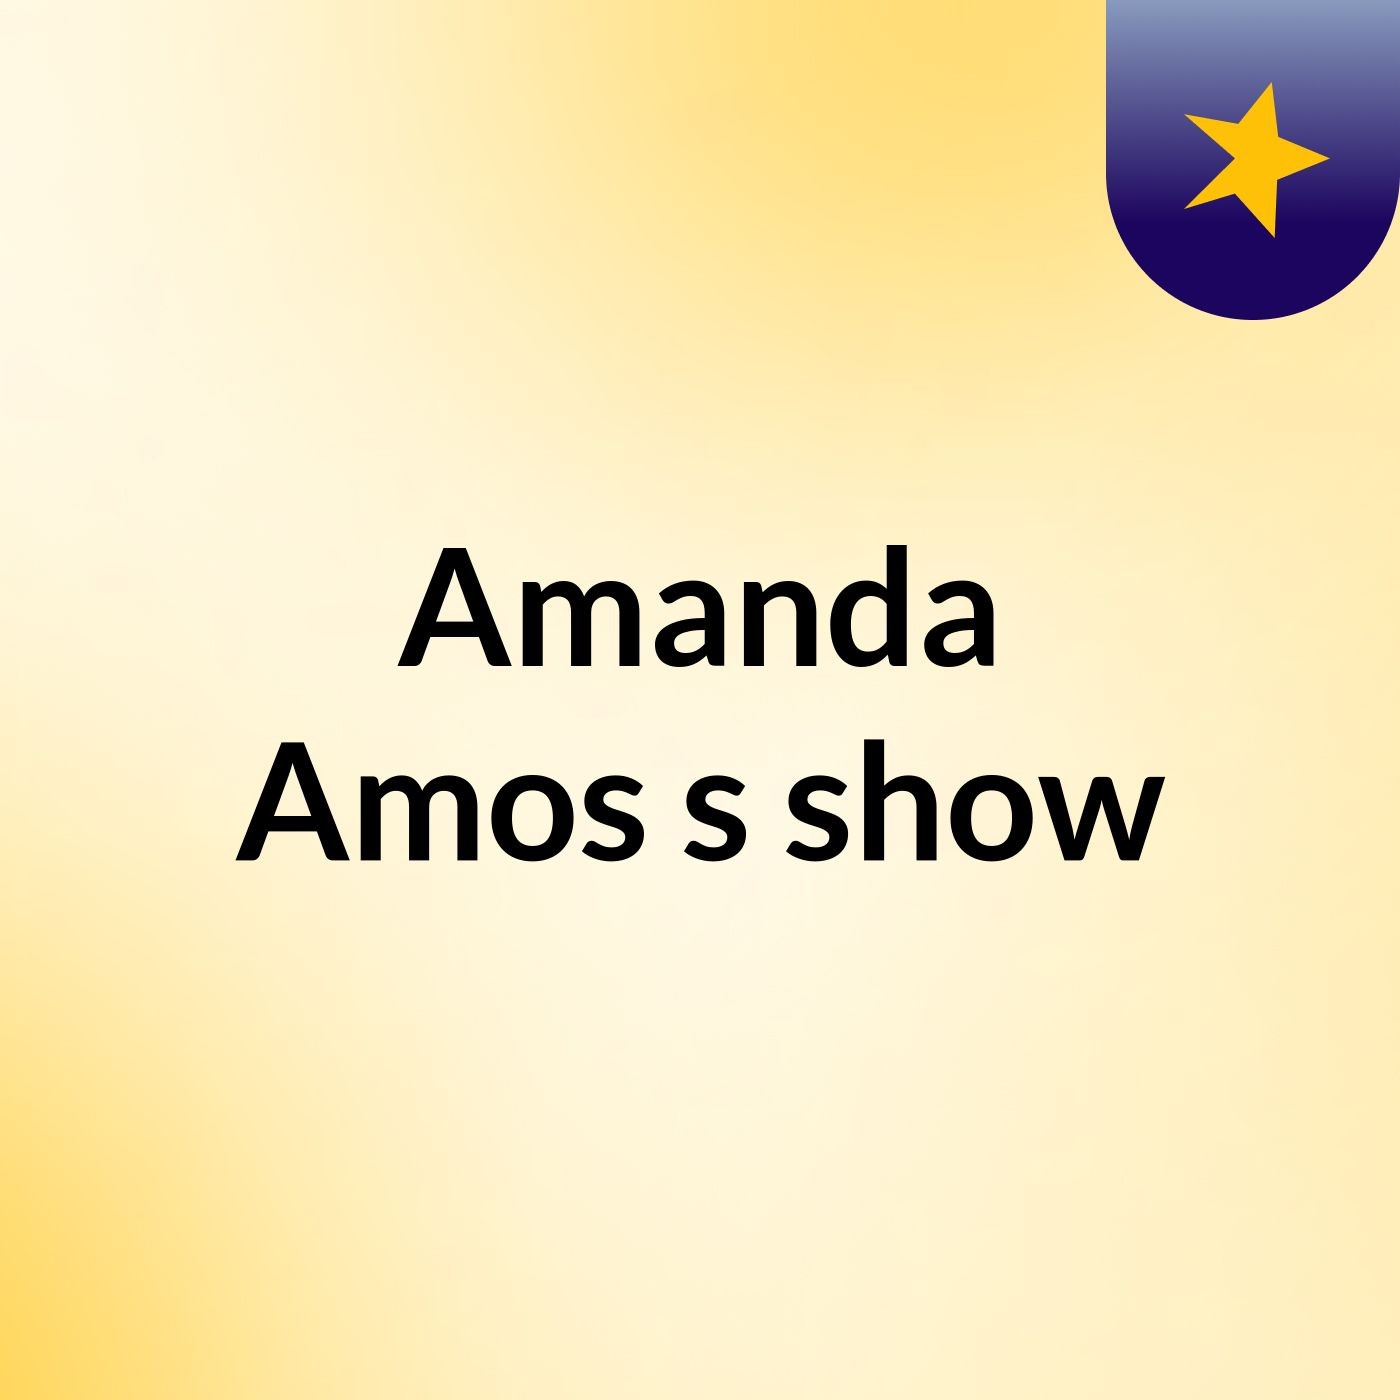 Amanda Amos's show